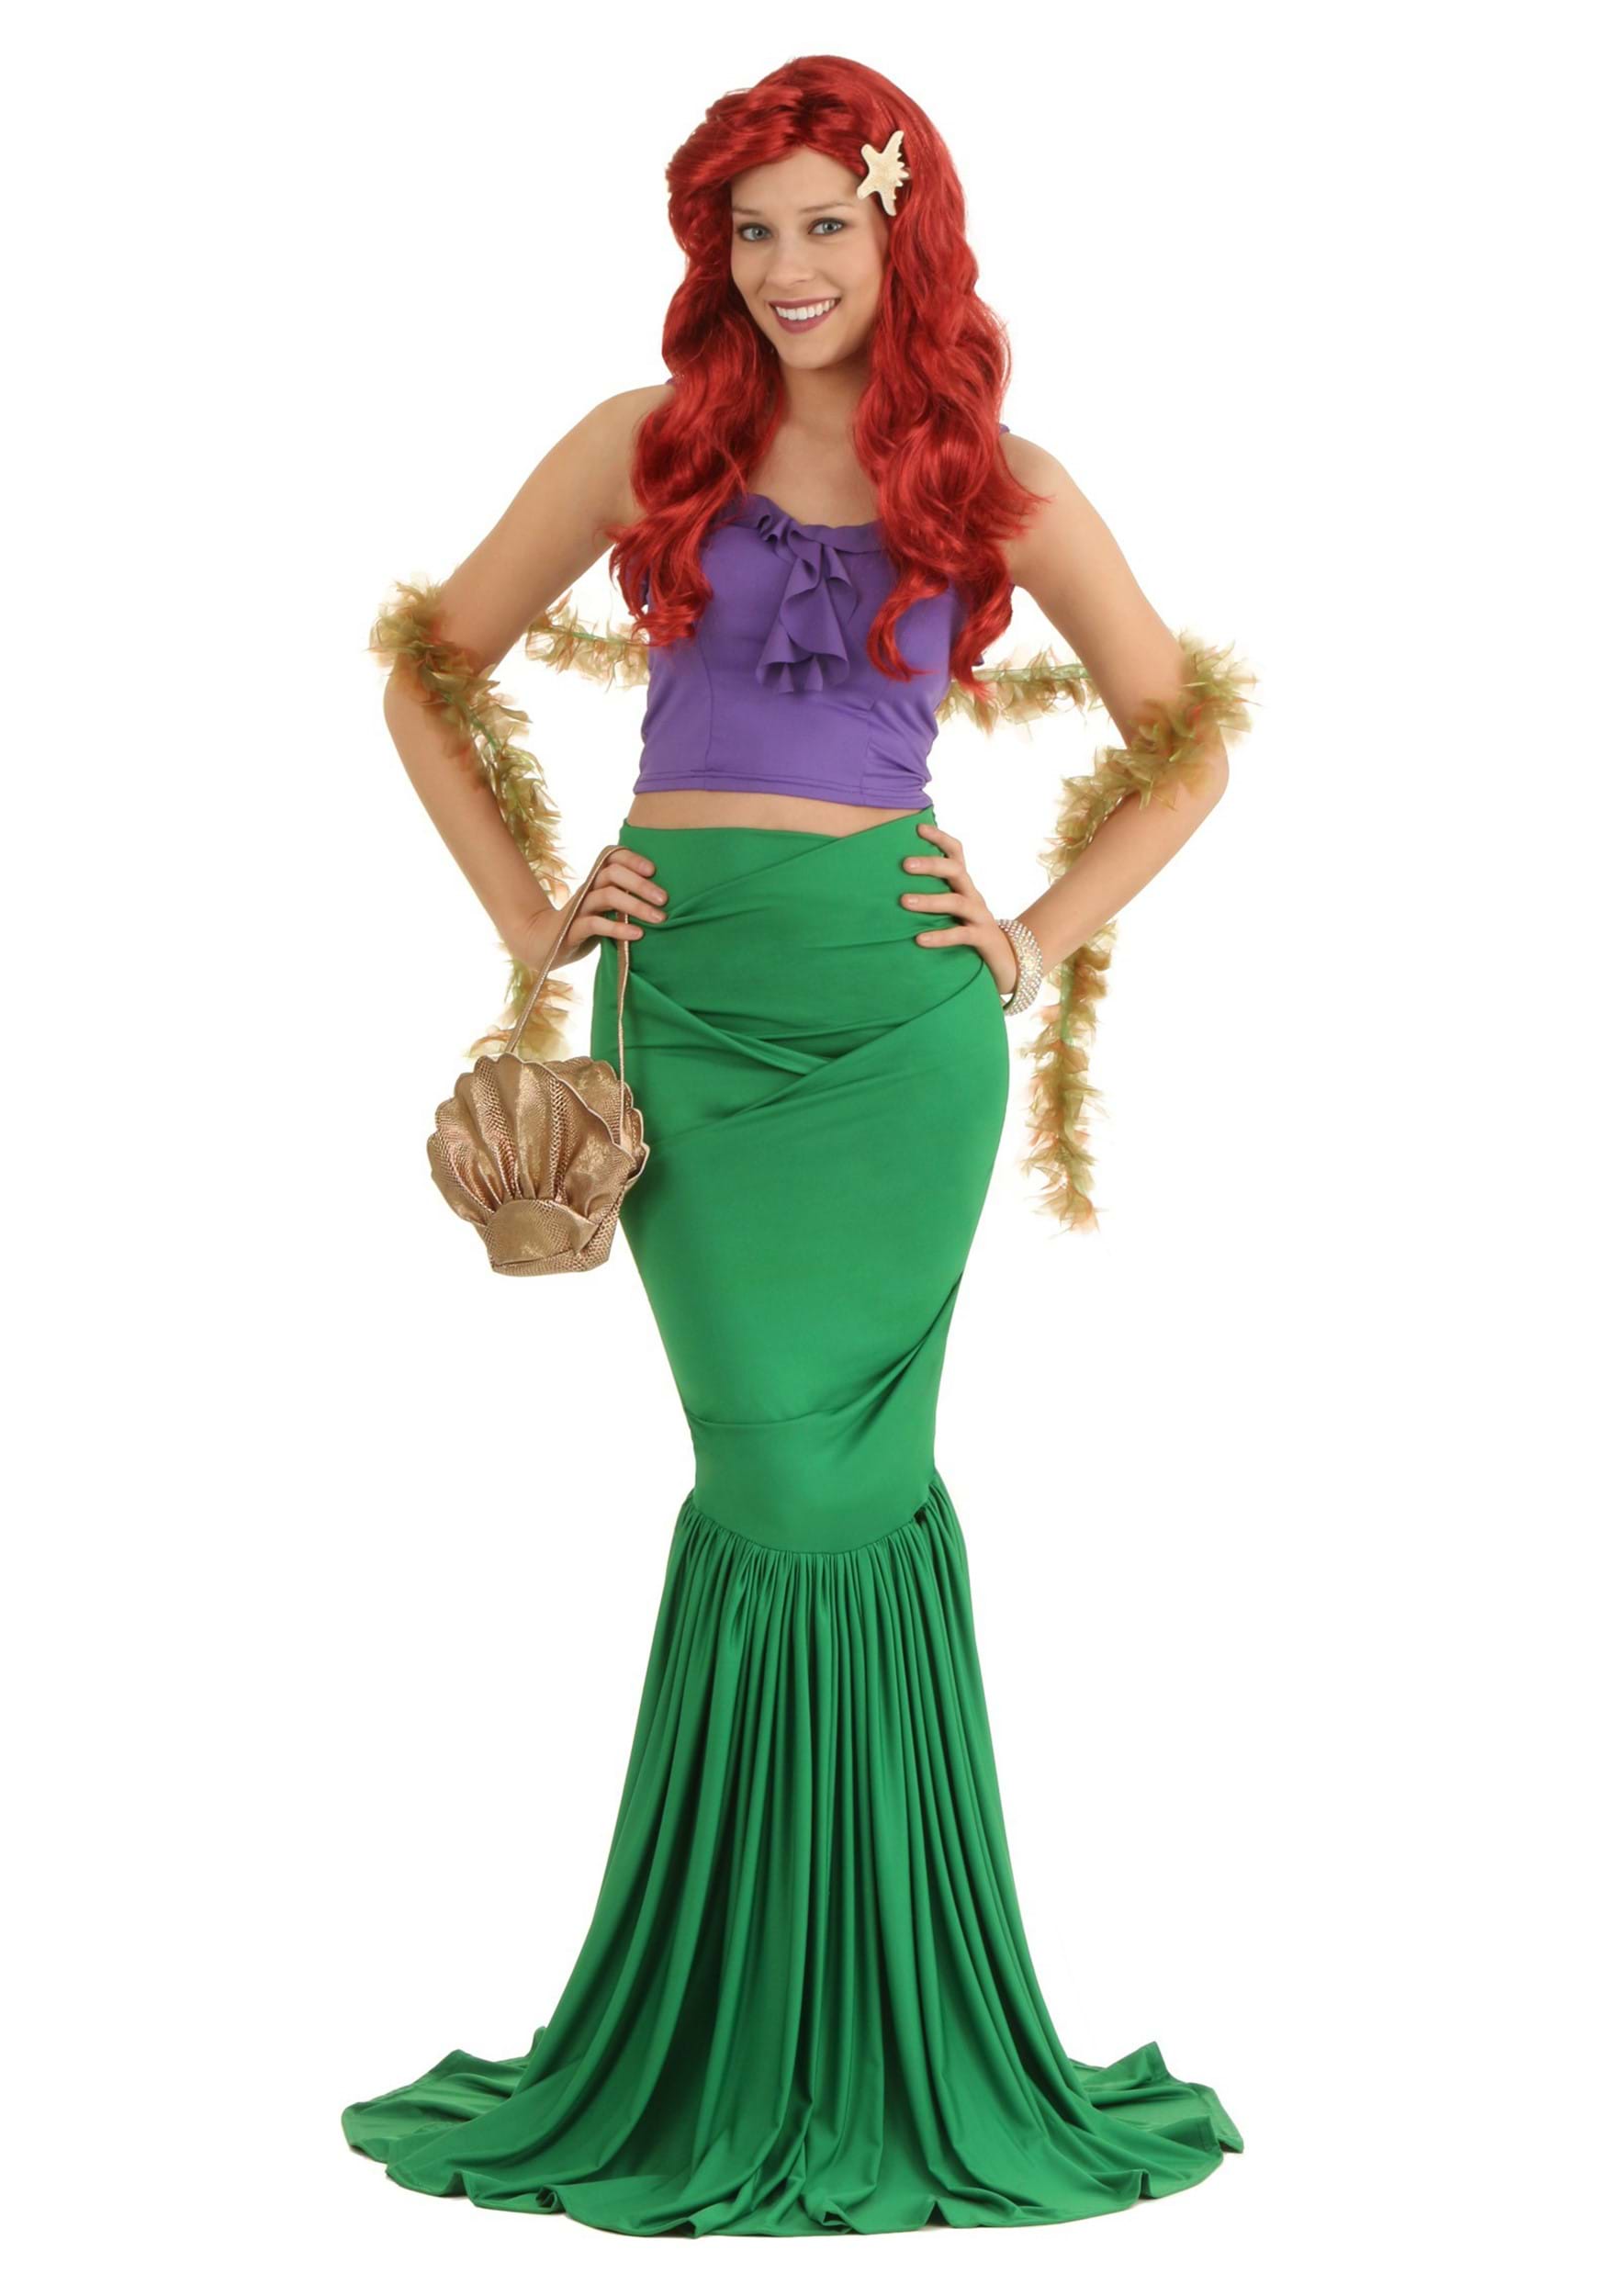 Image of FUN Costumes Adult Mermaid Costume | Women's Costumes